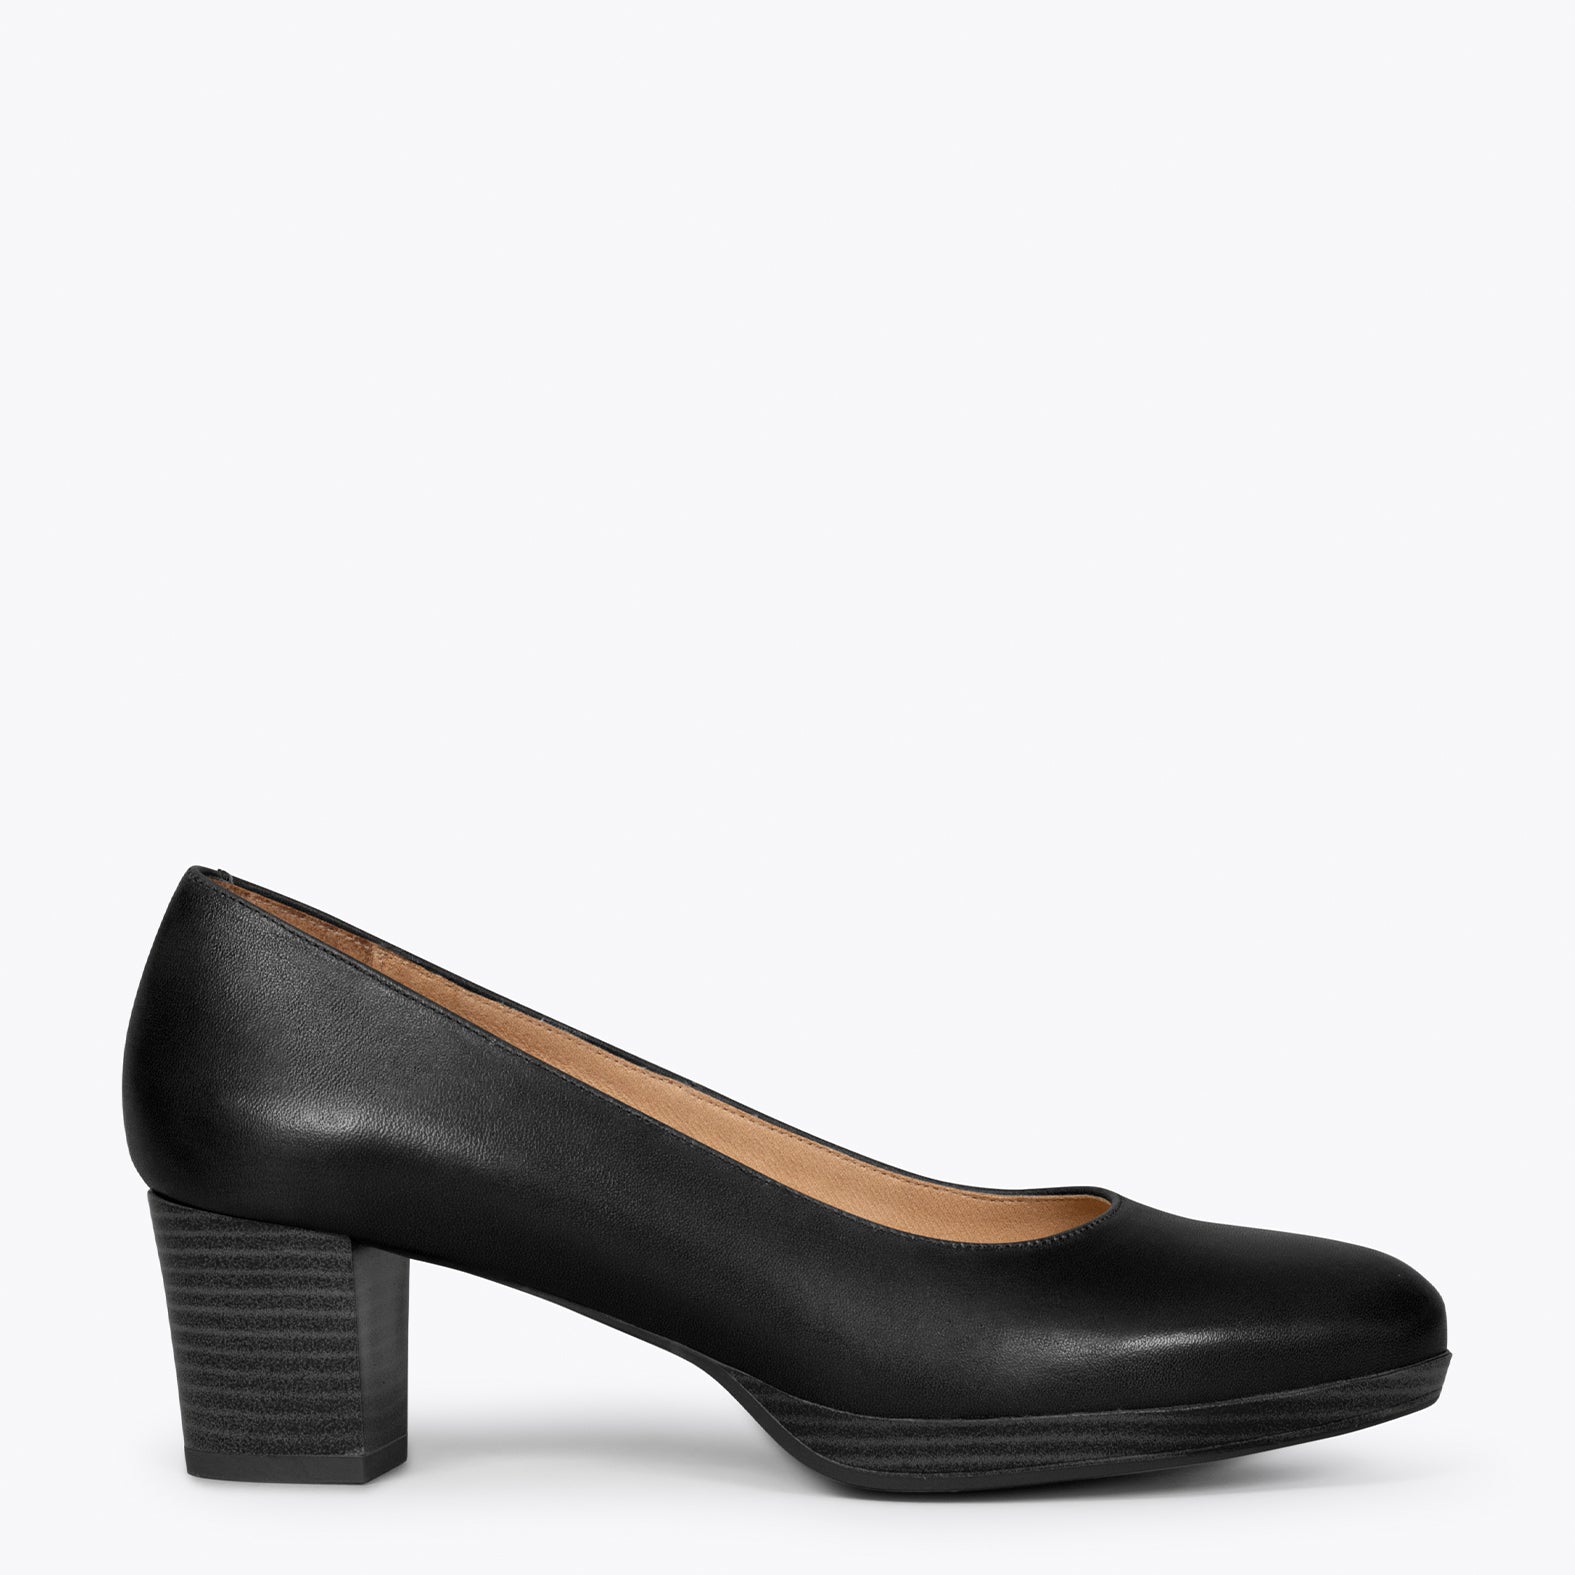 FLIGHT S – BLACK women's shoes with low heel and platform